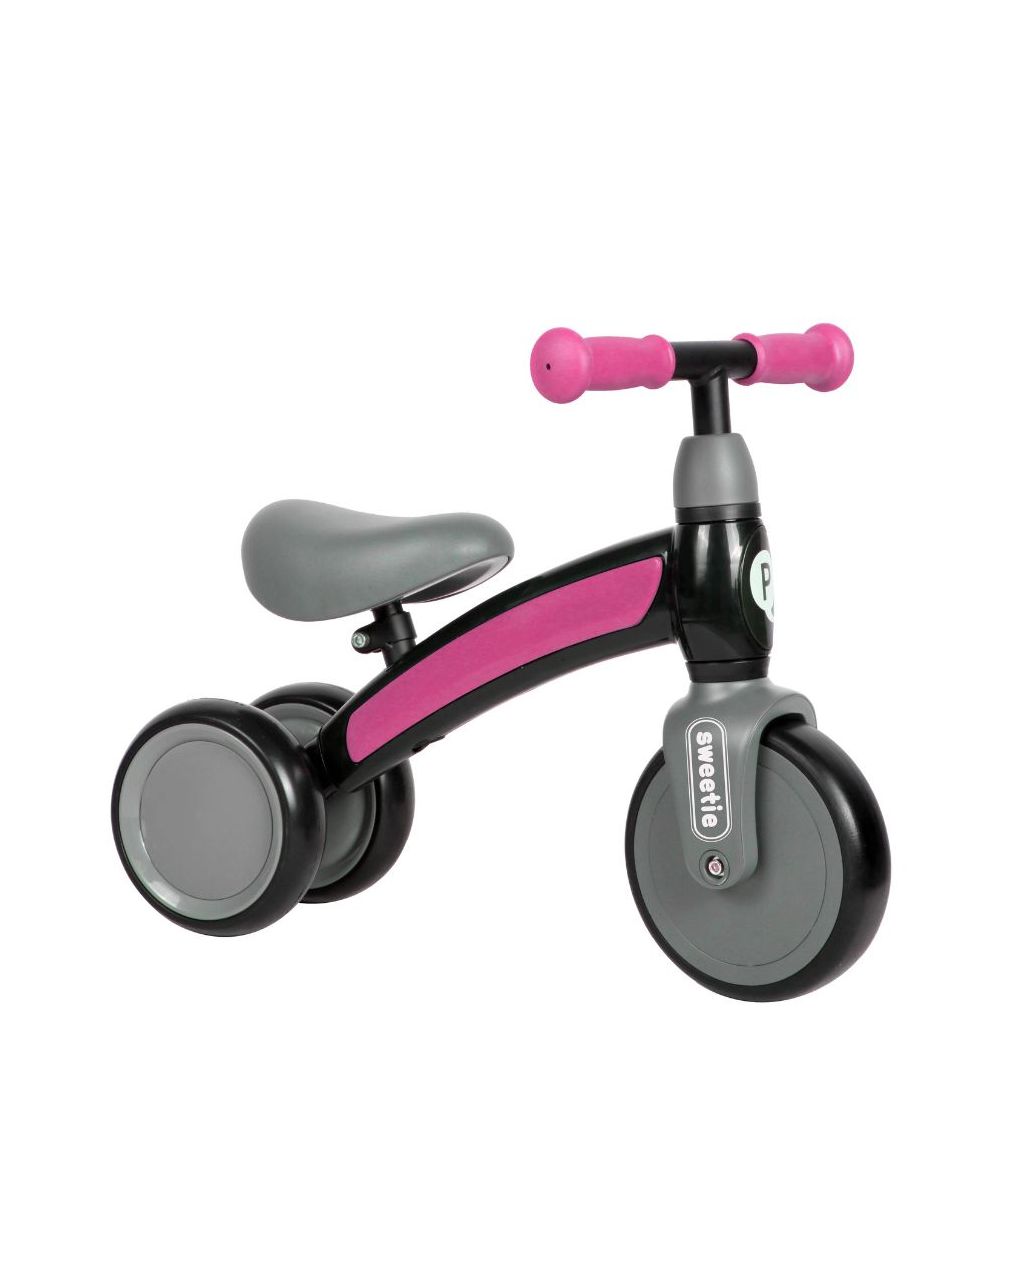 Qplay sweetie ροζ - ποδήλατο ισορροπίας/ περπατούρα 01-1212063-03